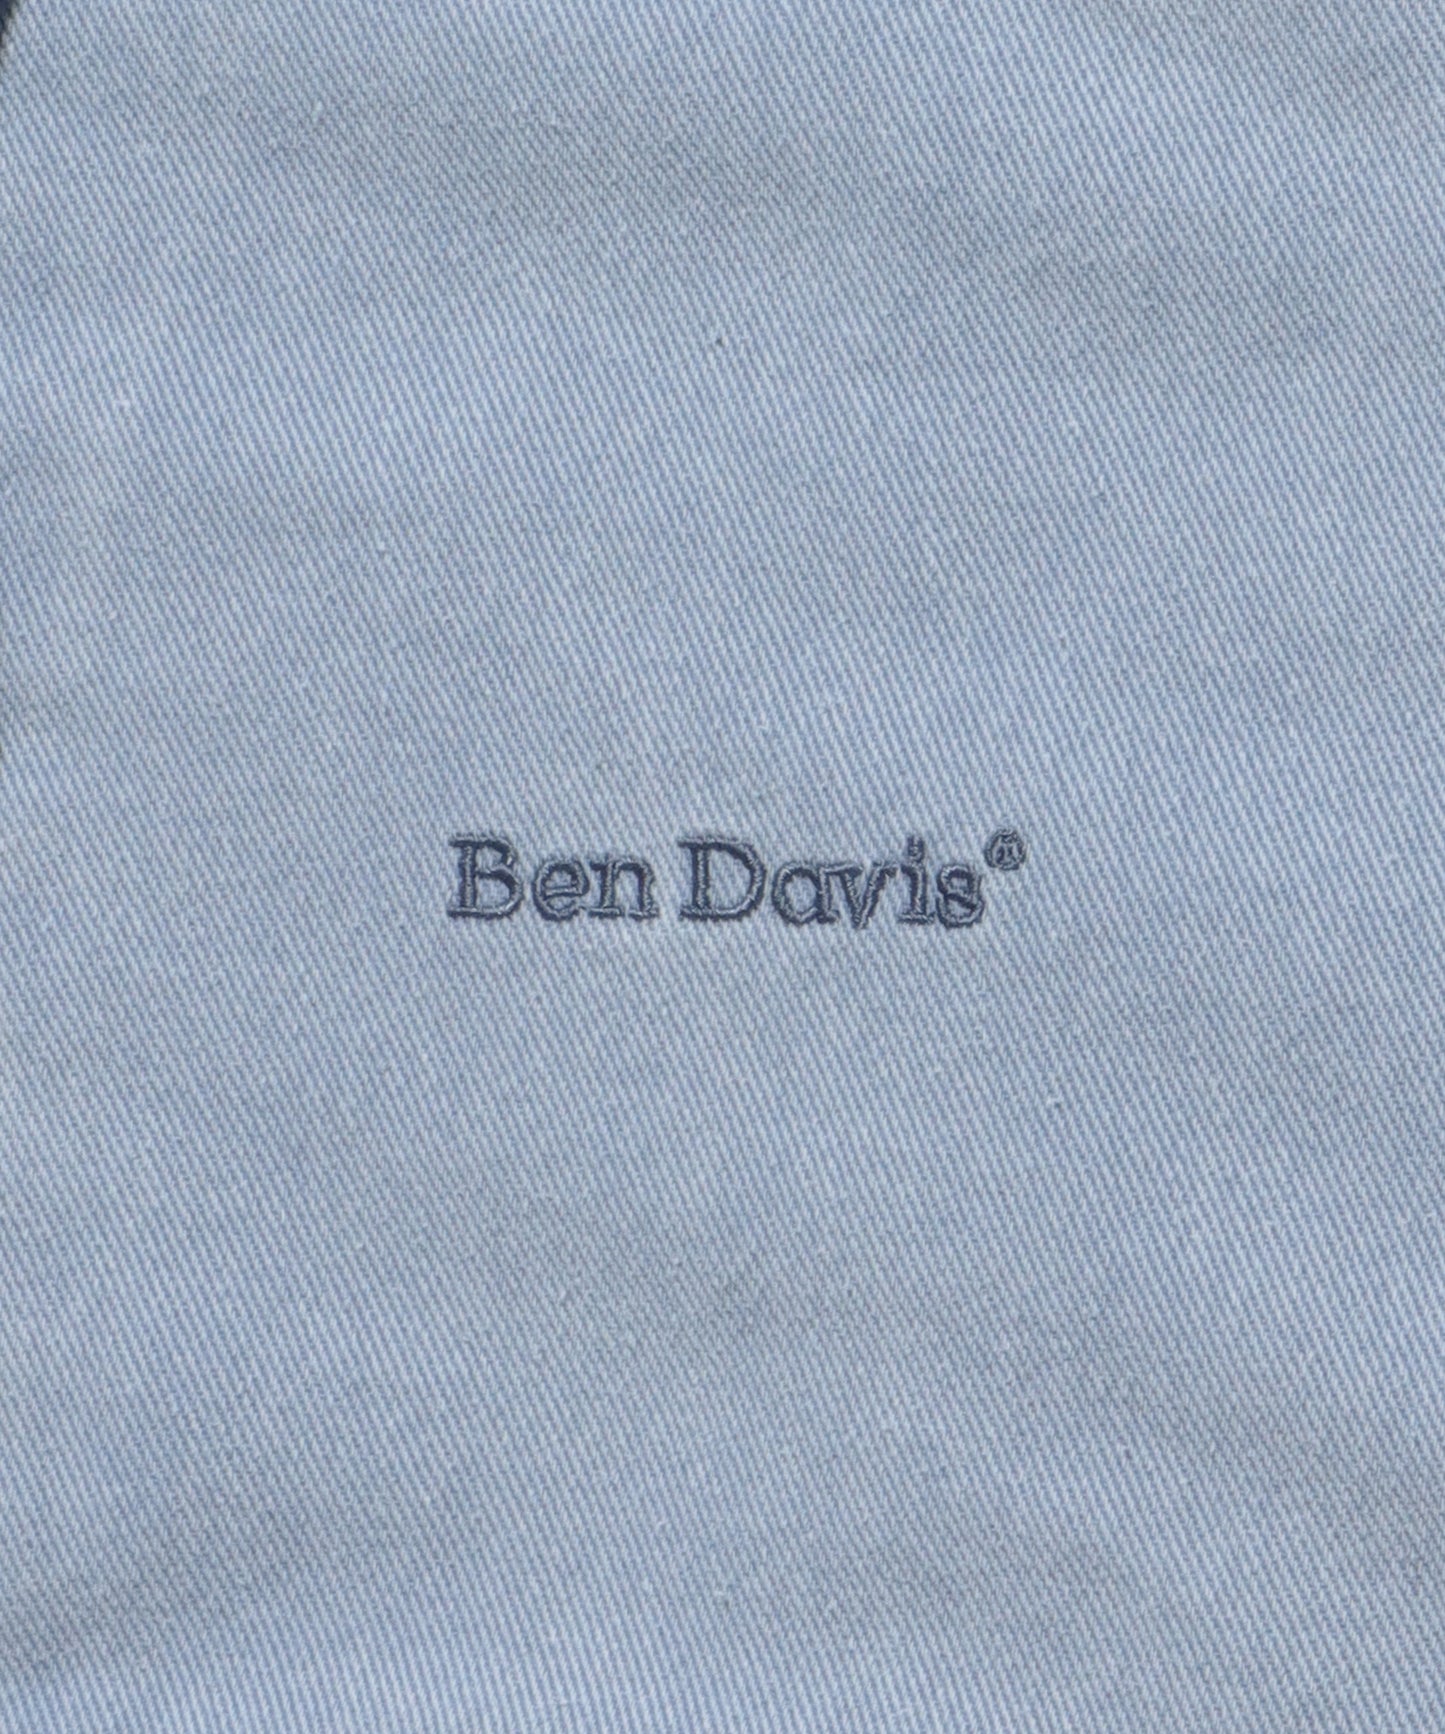 【BEN DAVIS(ベンデイビス)】 BLEACHED WORKERS PARKA / ワイド ジップ ロゴ 刺繍 パーカー サックスブルー